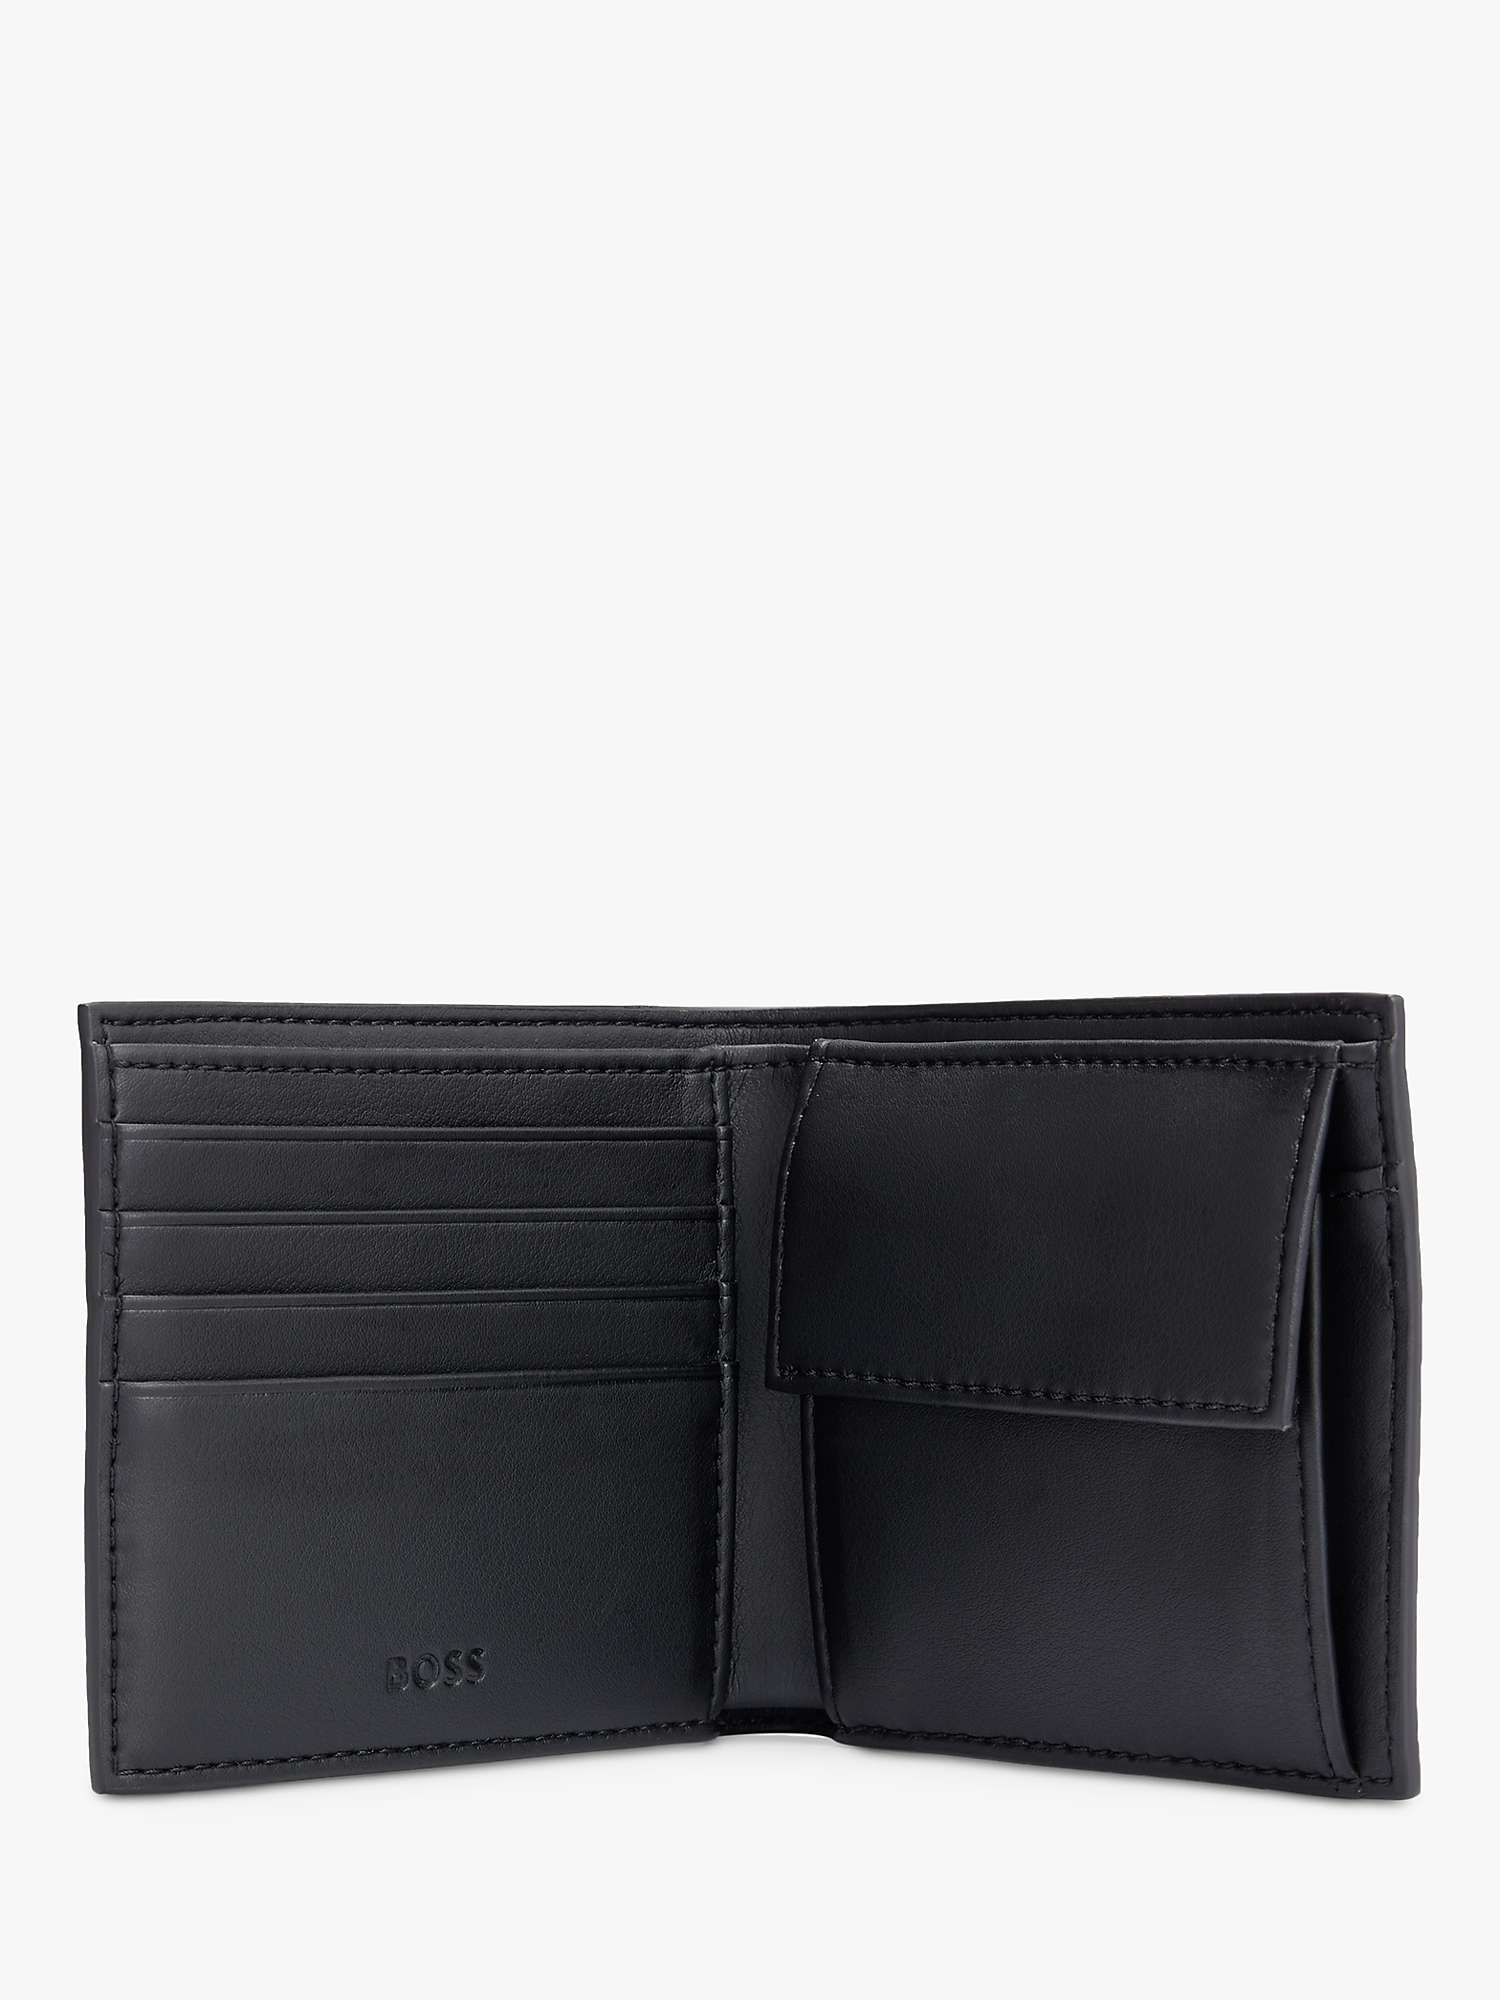 Buy BOSS Faux Leather Signature Stripe Wallet, Black/Multi Online at johnlewis.com